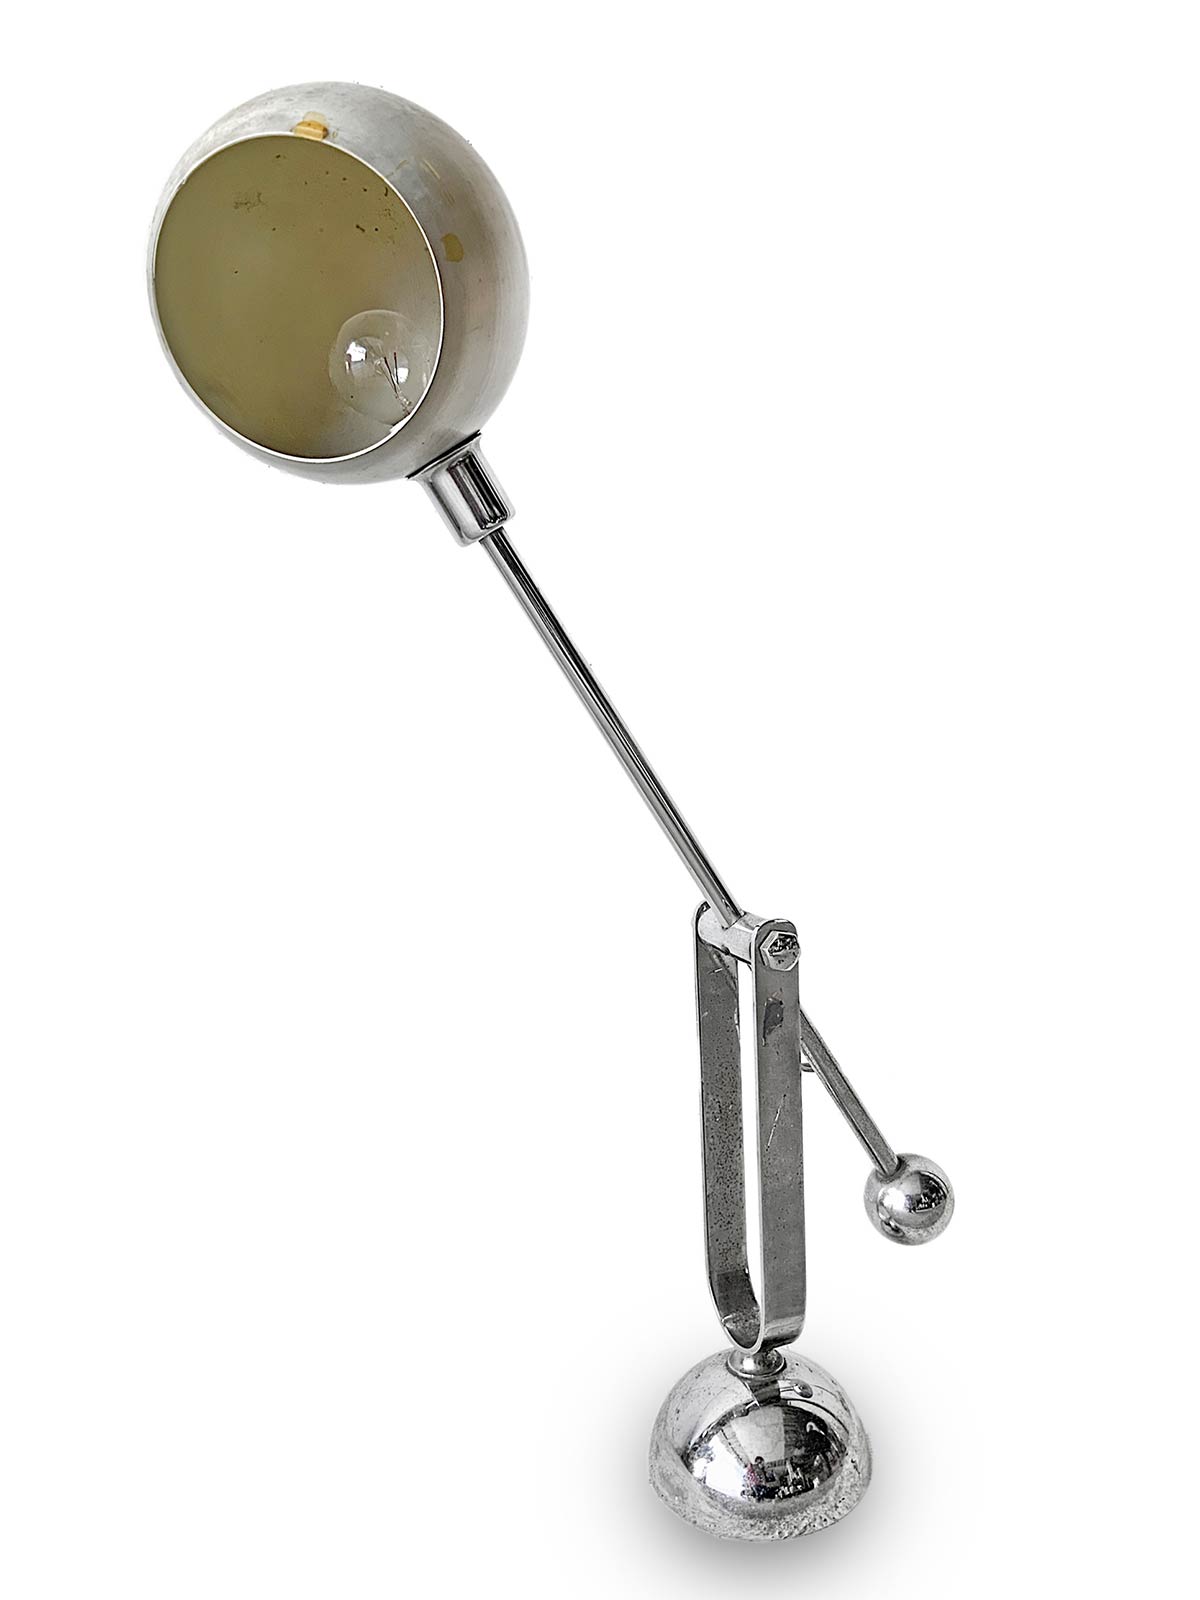 Table lamp, Italian production. Chromed metal spherical diffuser in glazed aluminum. Years 50. Wear